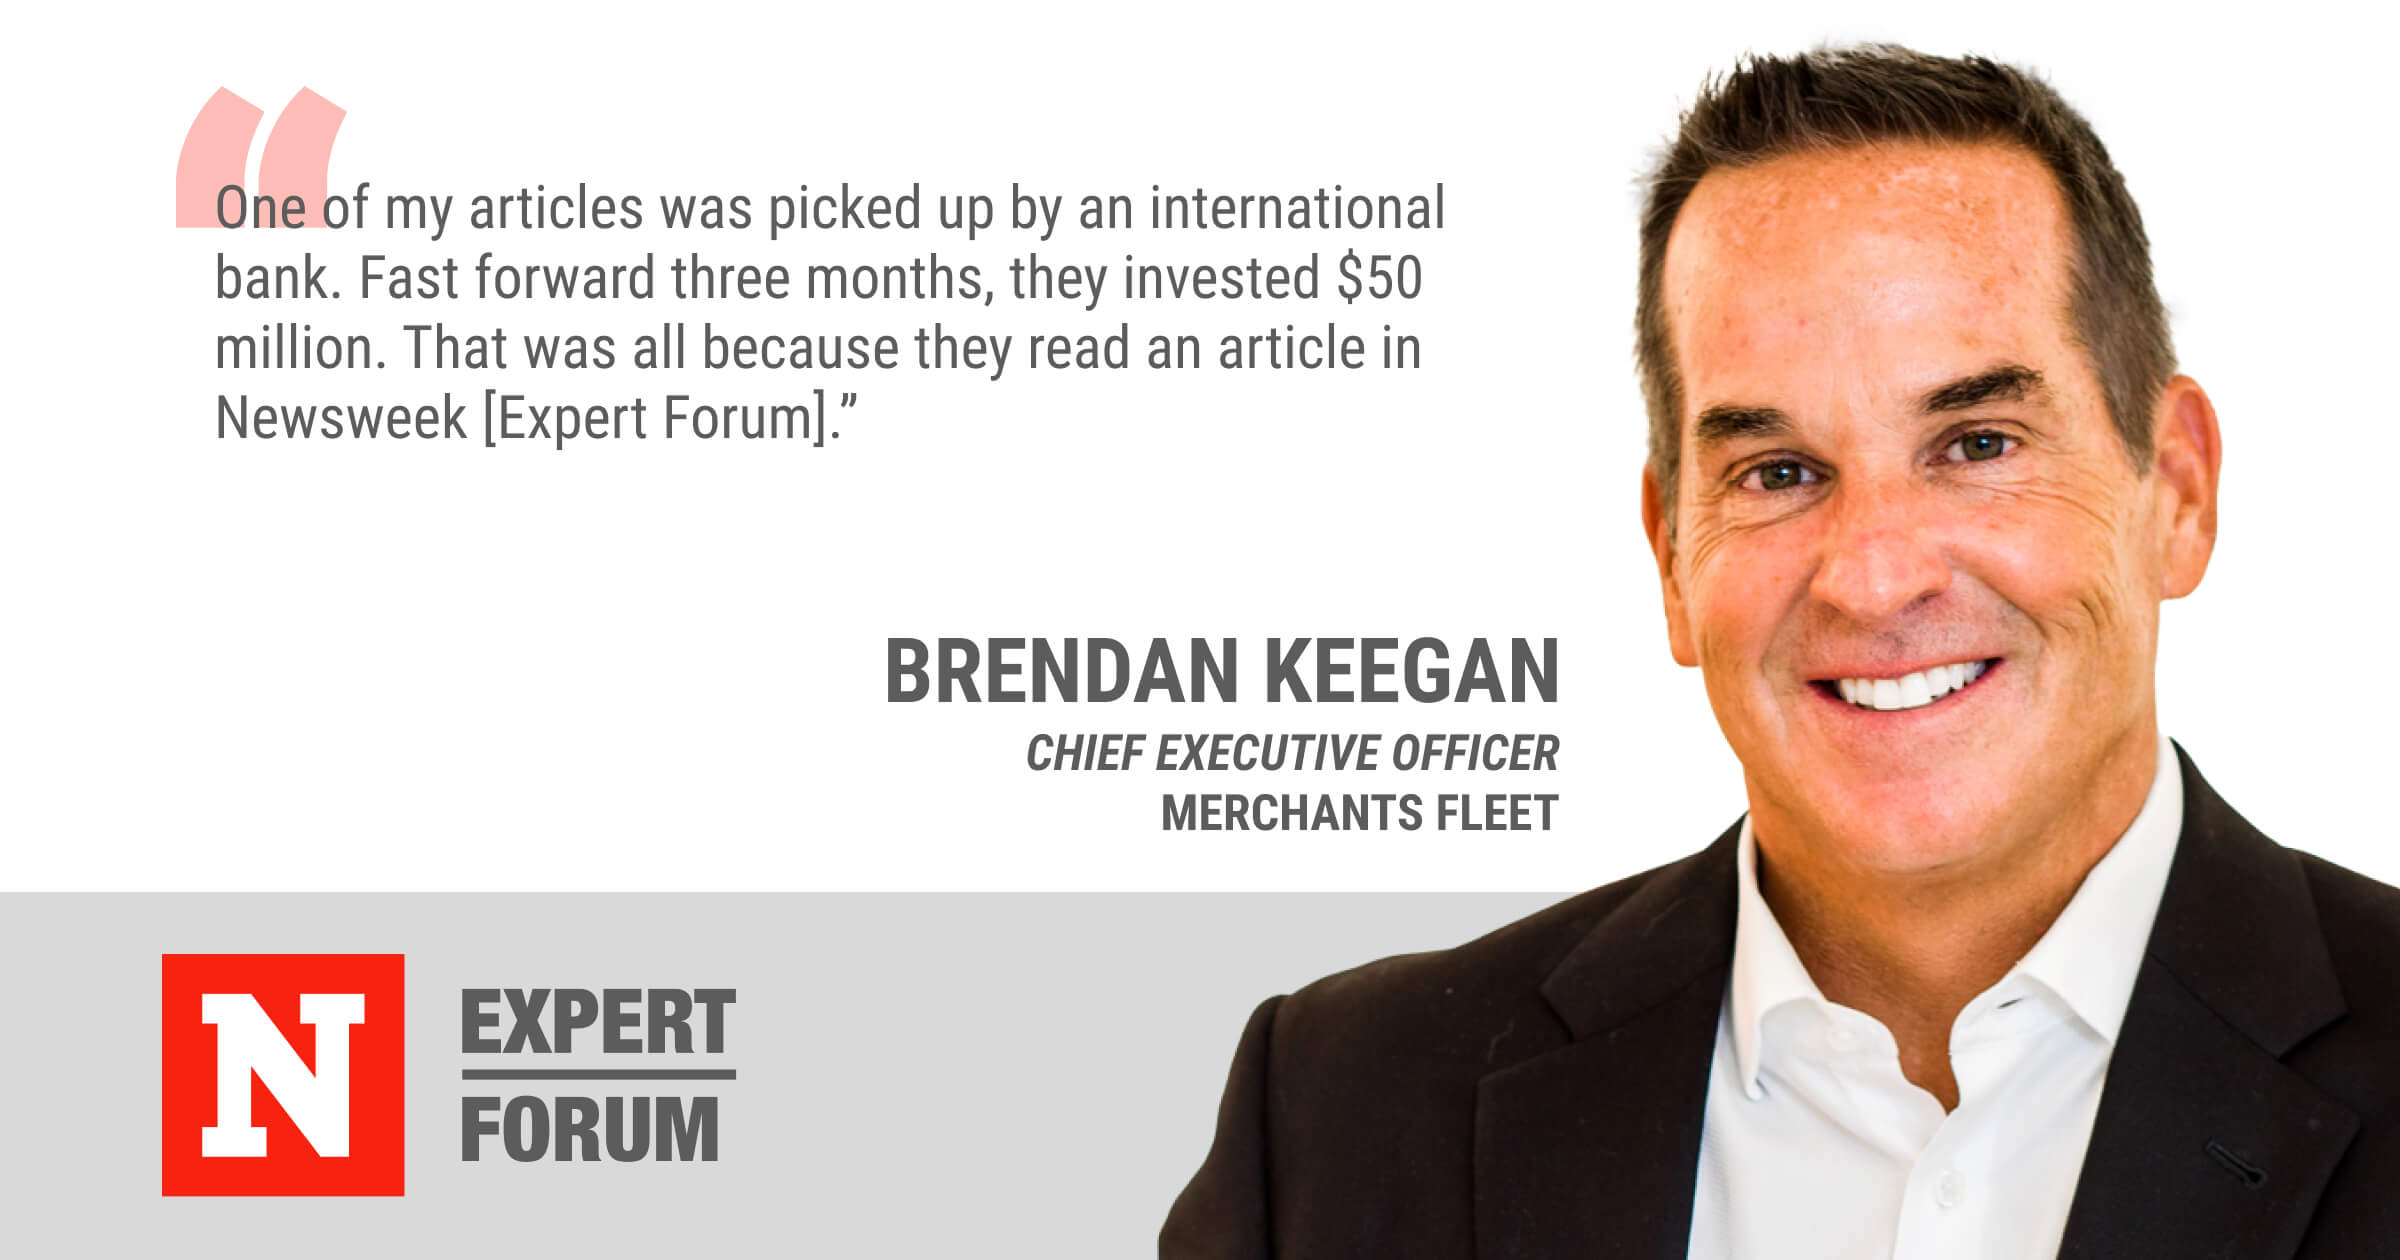 Newsweek Expert Forum member, Brendan Keegan